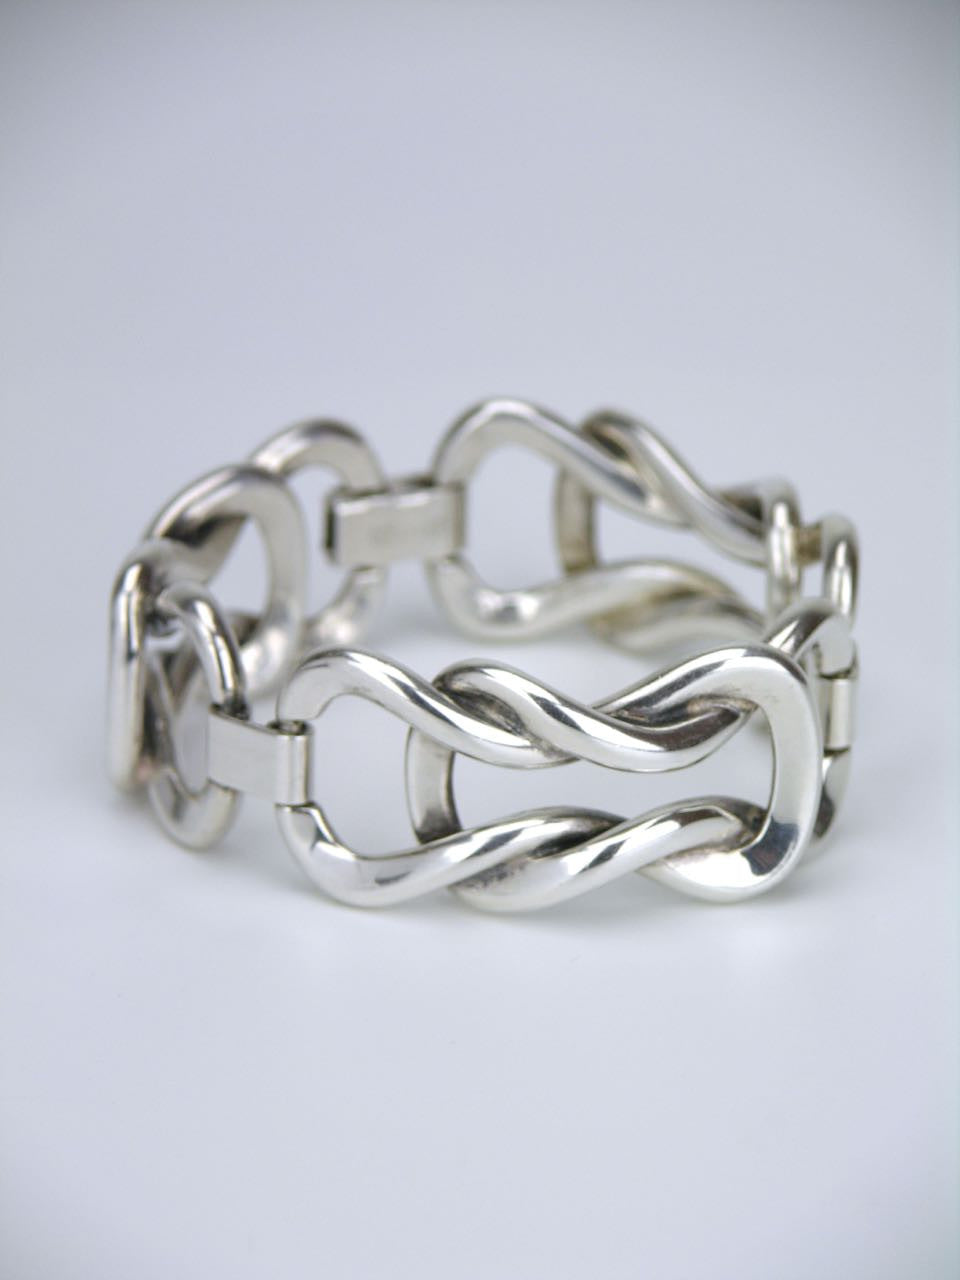 Wilhelm Binder silver knot bracelet